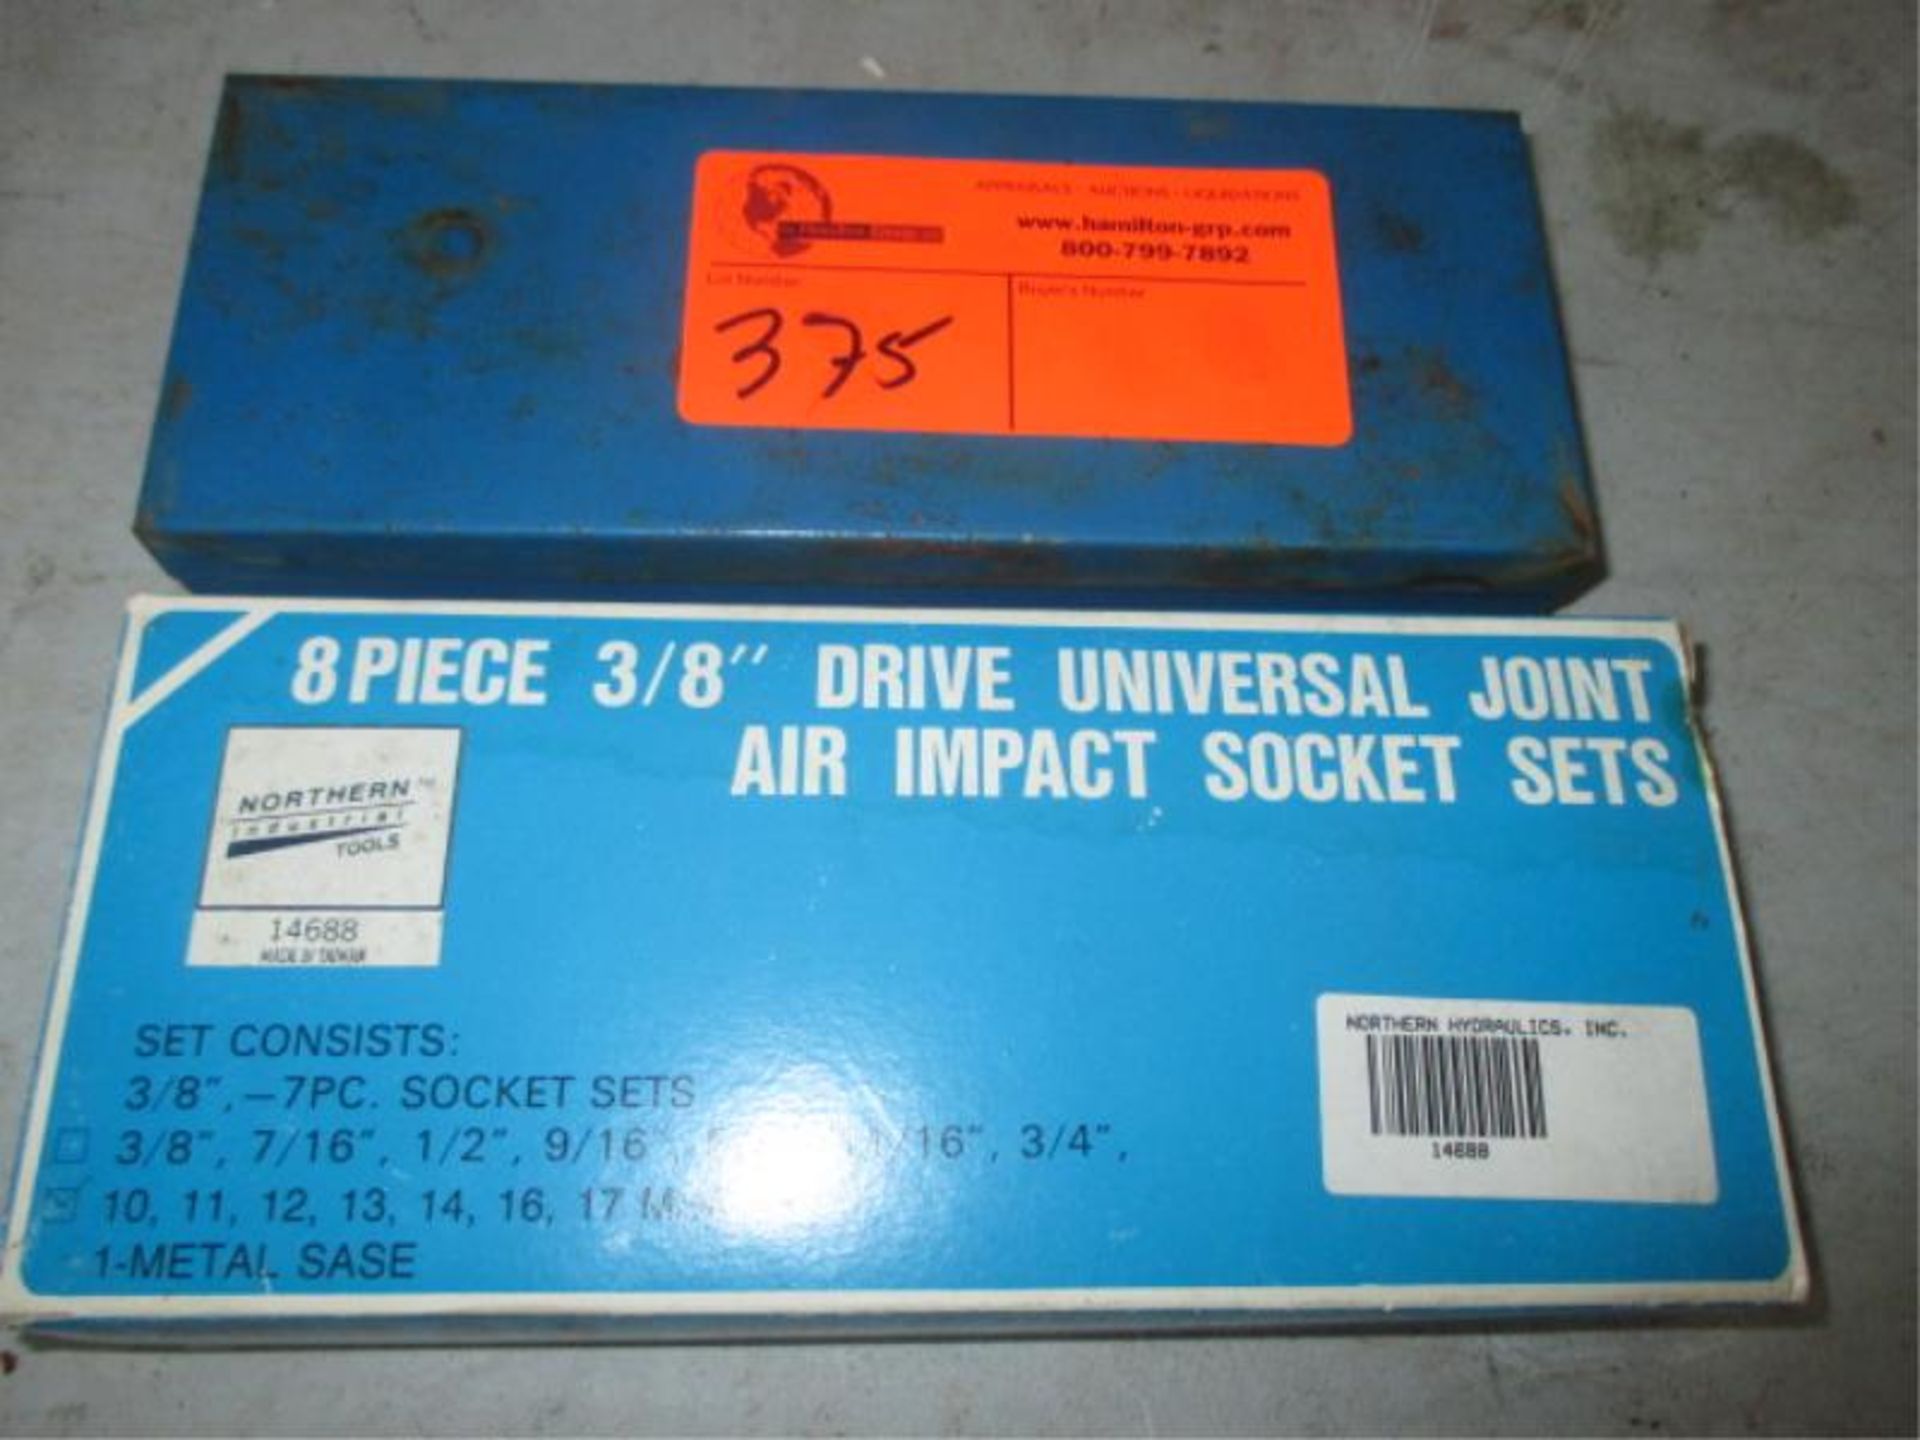 (2) 8pc 3/8" Dr, Impact Universal Socket Set in Blue Case, 1 - New in Box Blue Case, 1 - New in Box - Image 6 of 6